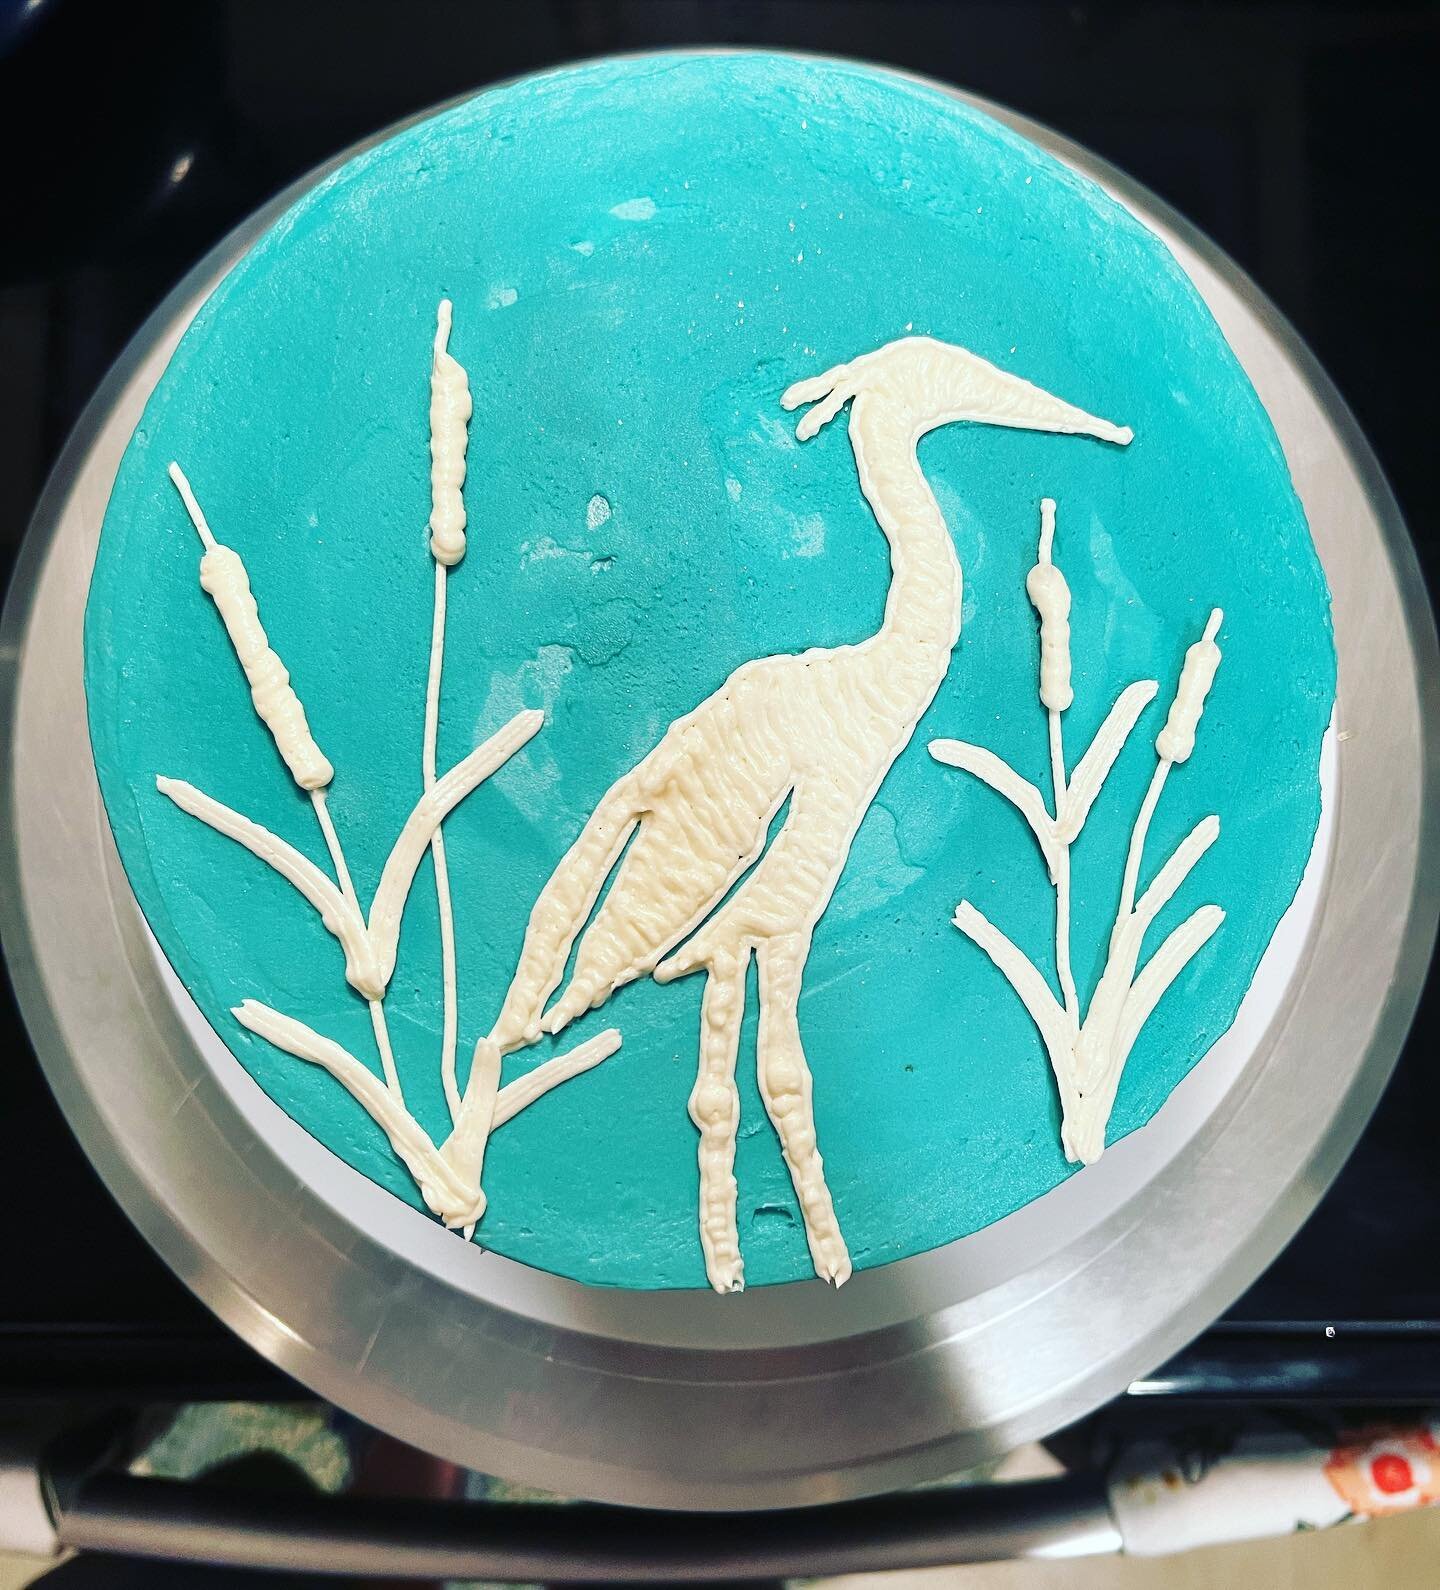 Blue Heron!
💙🤍💙🤍💙
-
-
-
-
-
#rhbakes #cake #cakes #cakedecorating #cakesofinstagram #cakesofinsta #cakesofig #vanillacake #vanillabuttercream #birthdaycake #birthday #birthdaygirl #baking #bakingfromscratch #fromscratch #fromscratchwithlove #bak